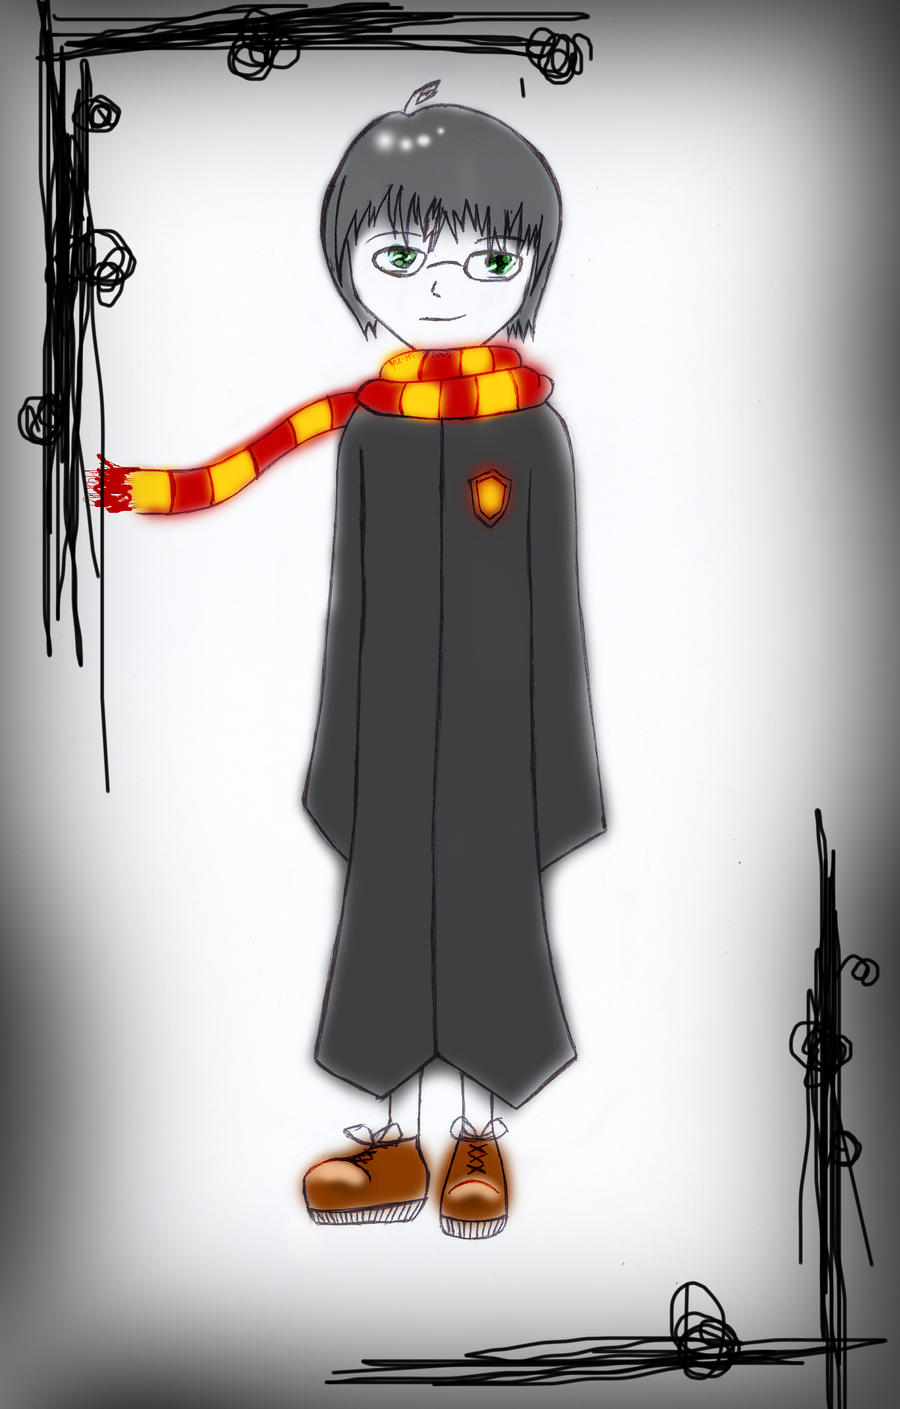 Potter-kun